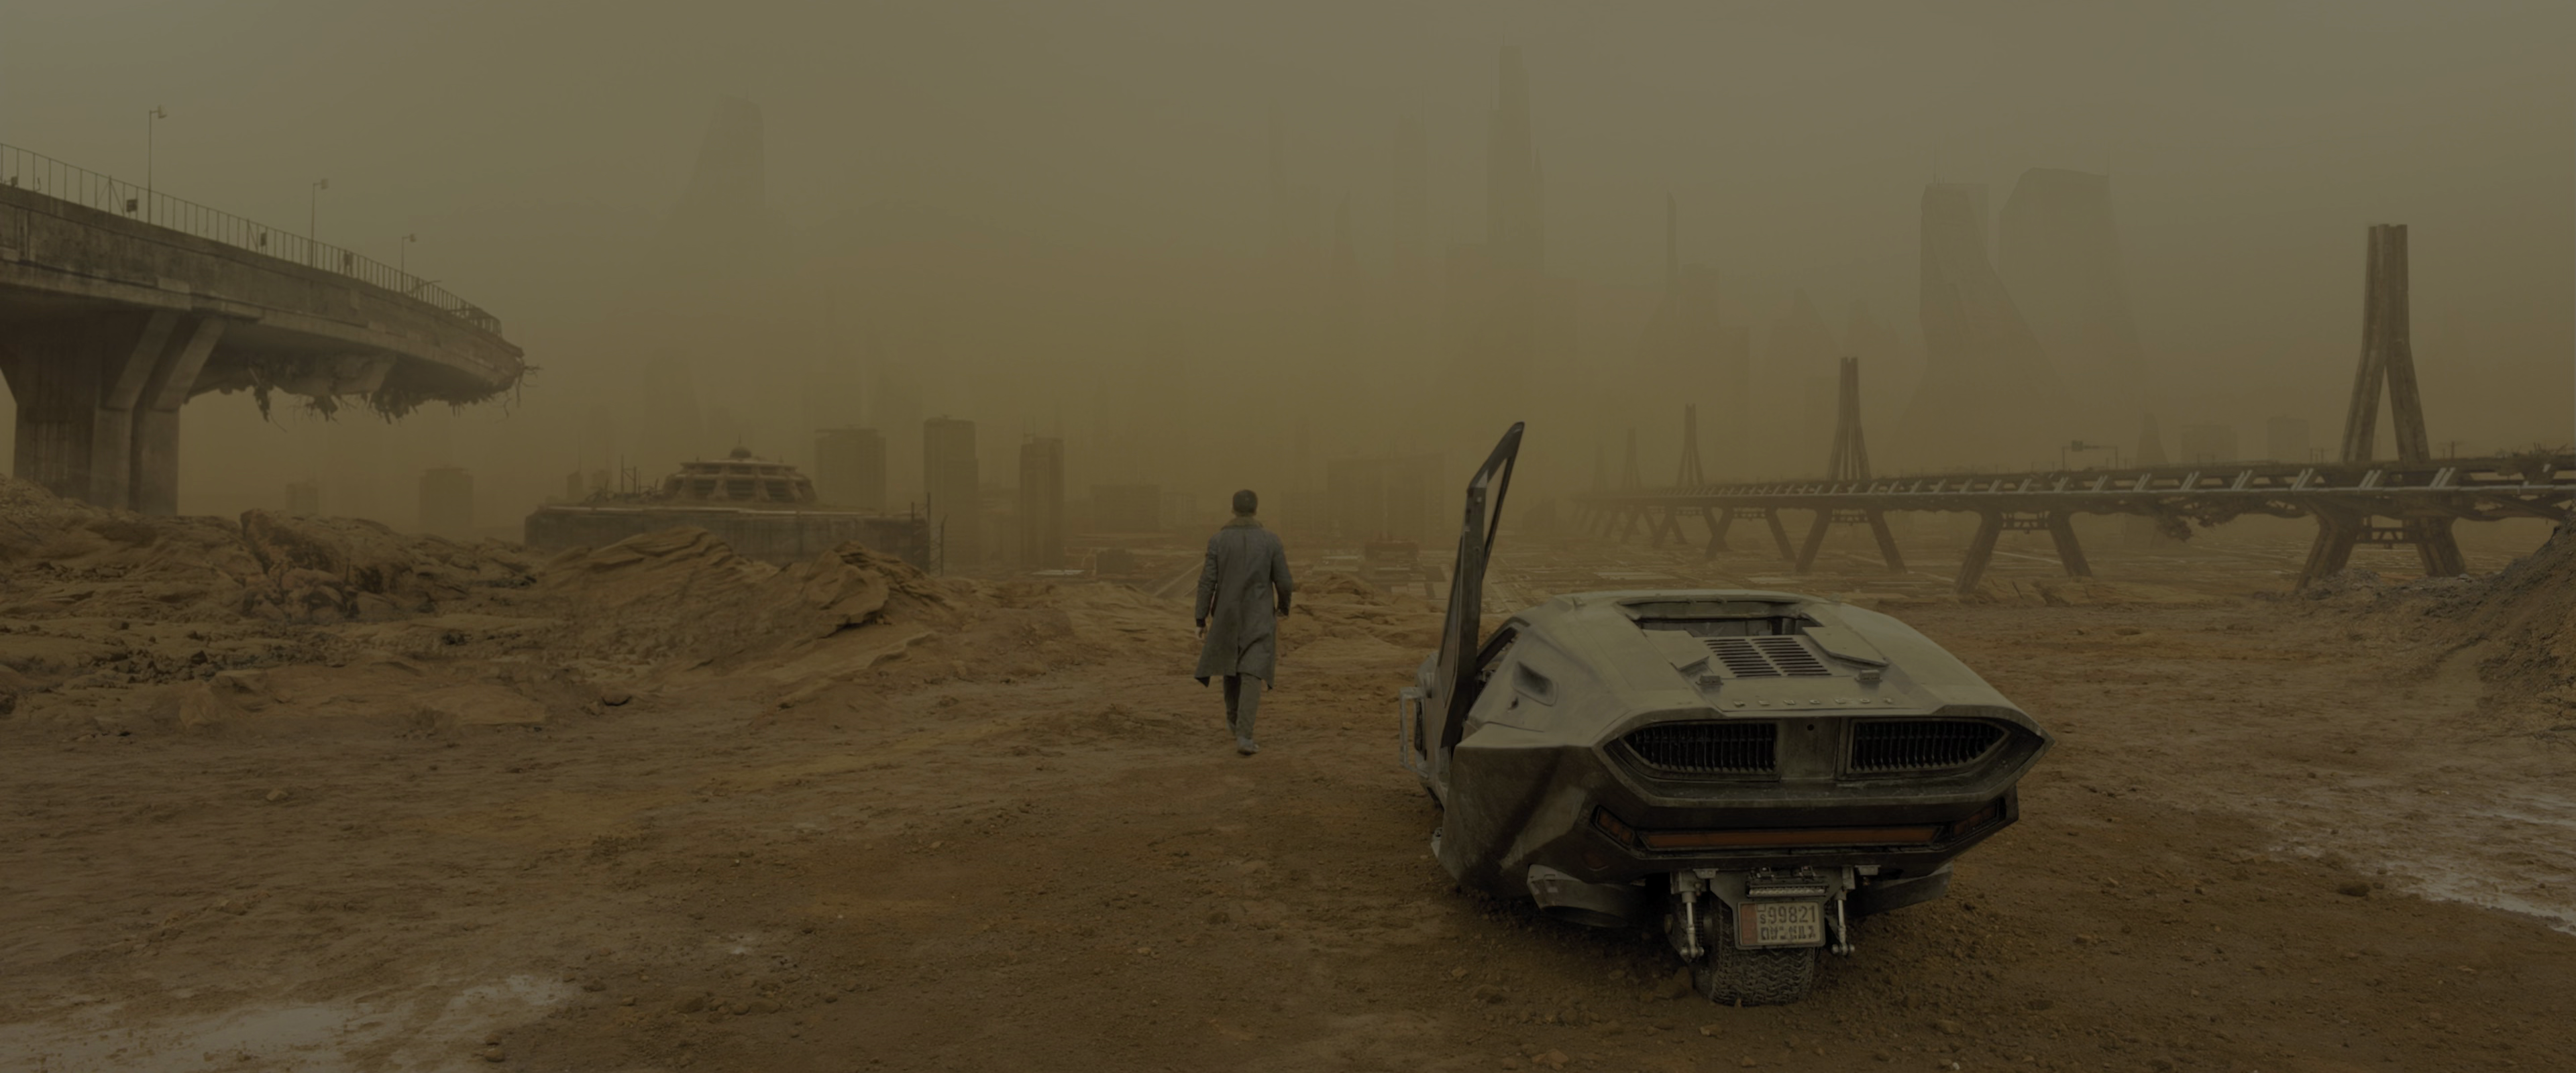 General 3840x1600 Blade Runner 2049 futuristic Blade Runner science fiction movies